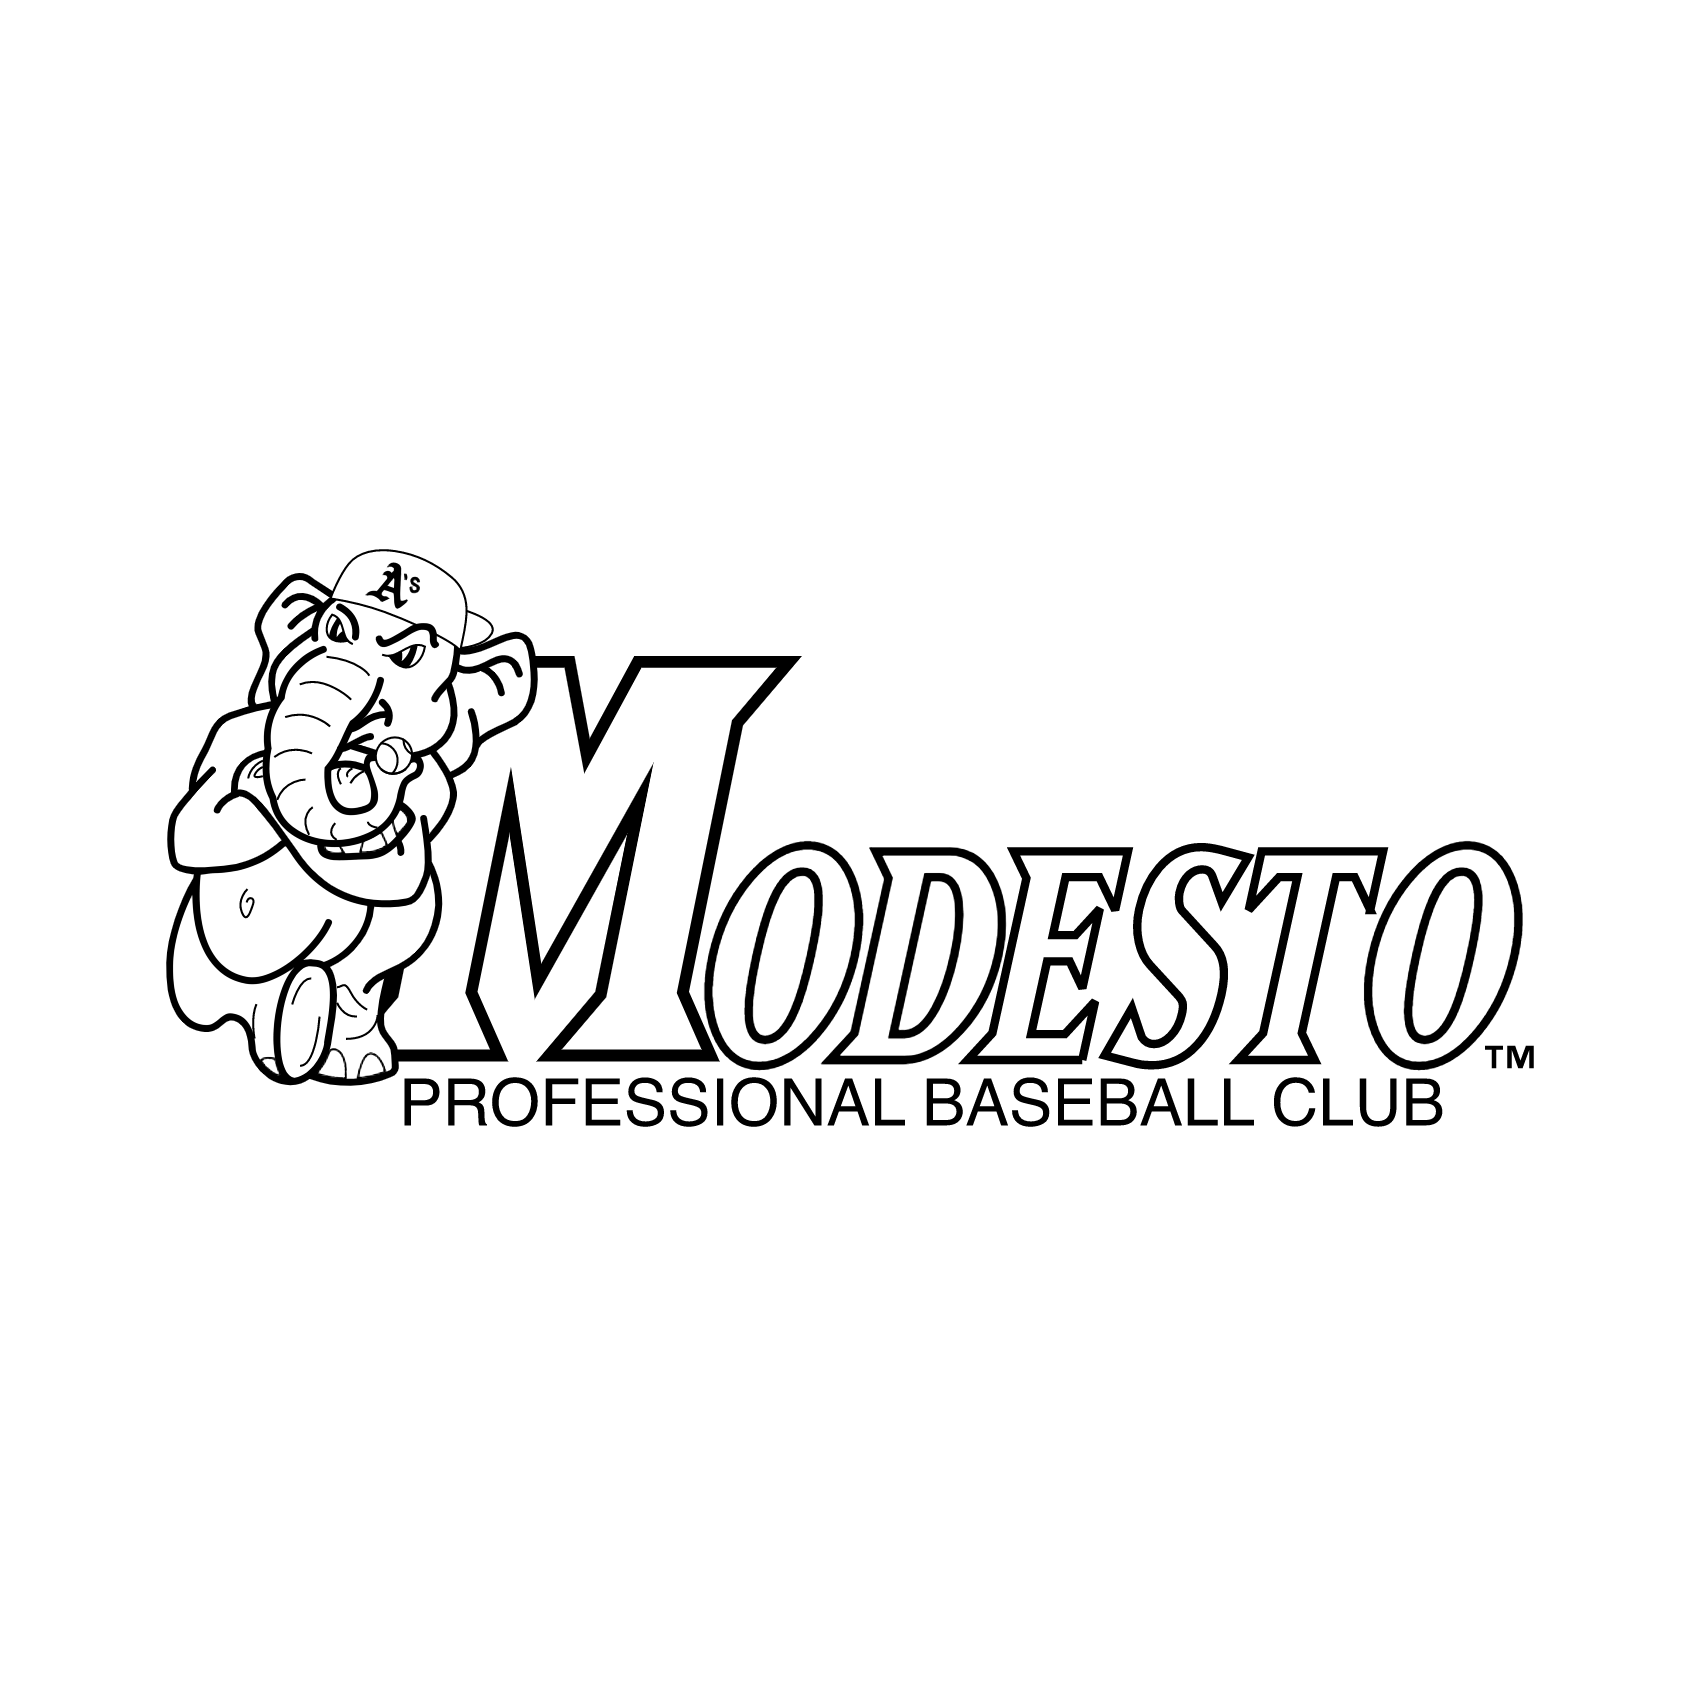 Modesto A's Logo PNG Transparent & SVG Vector - Freebie Supply